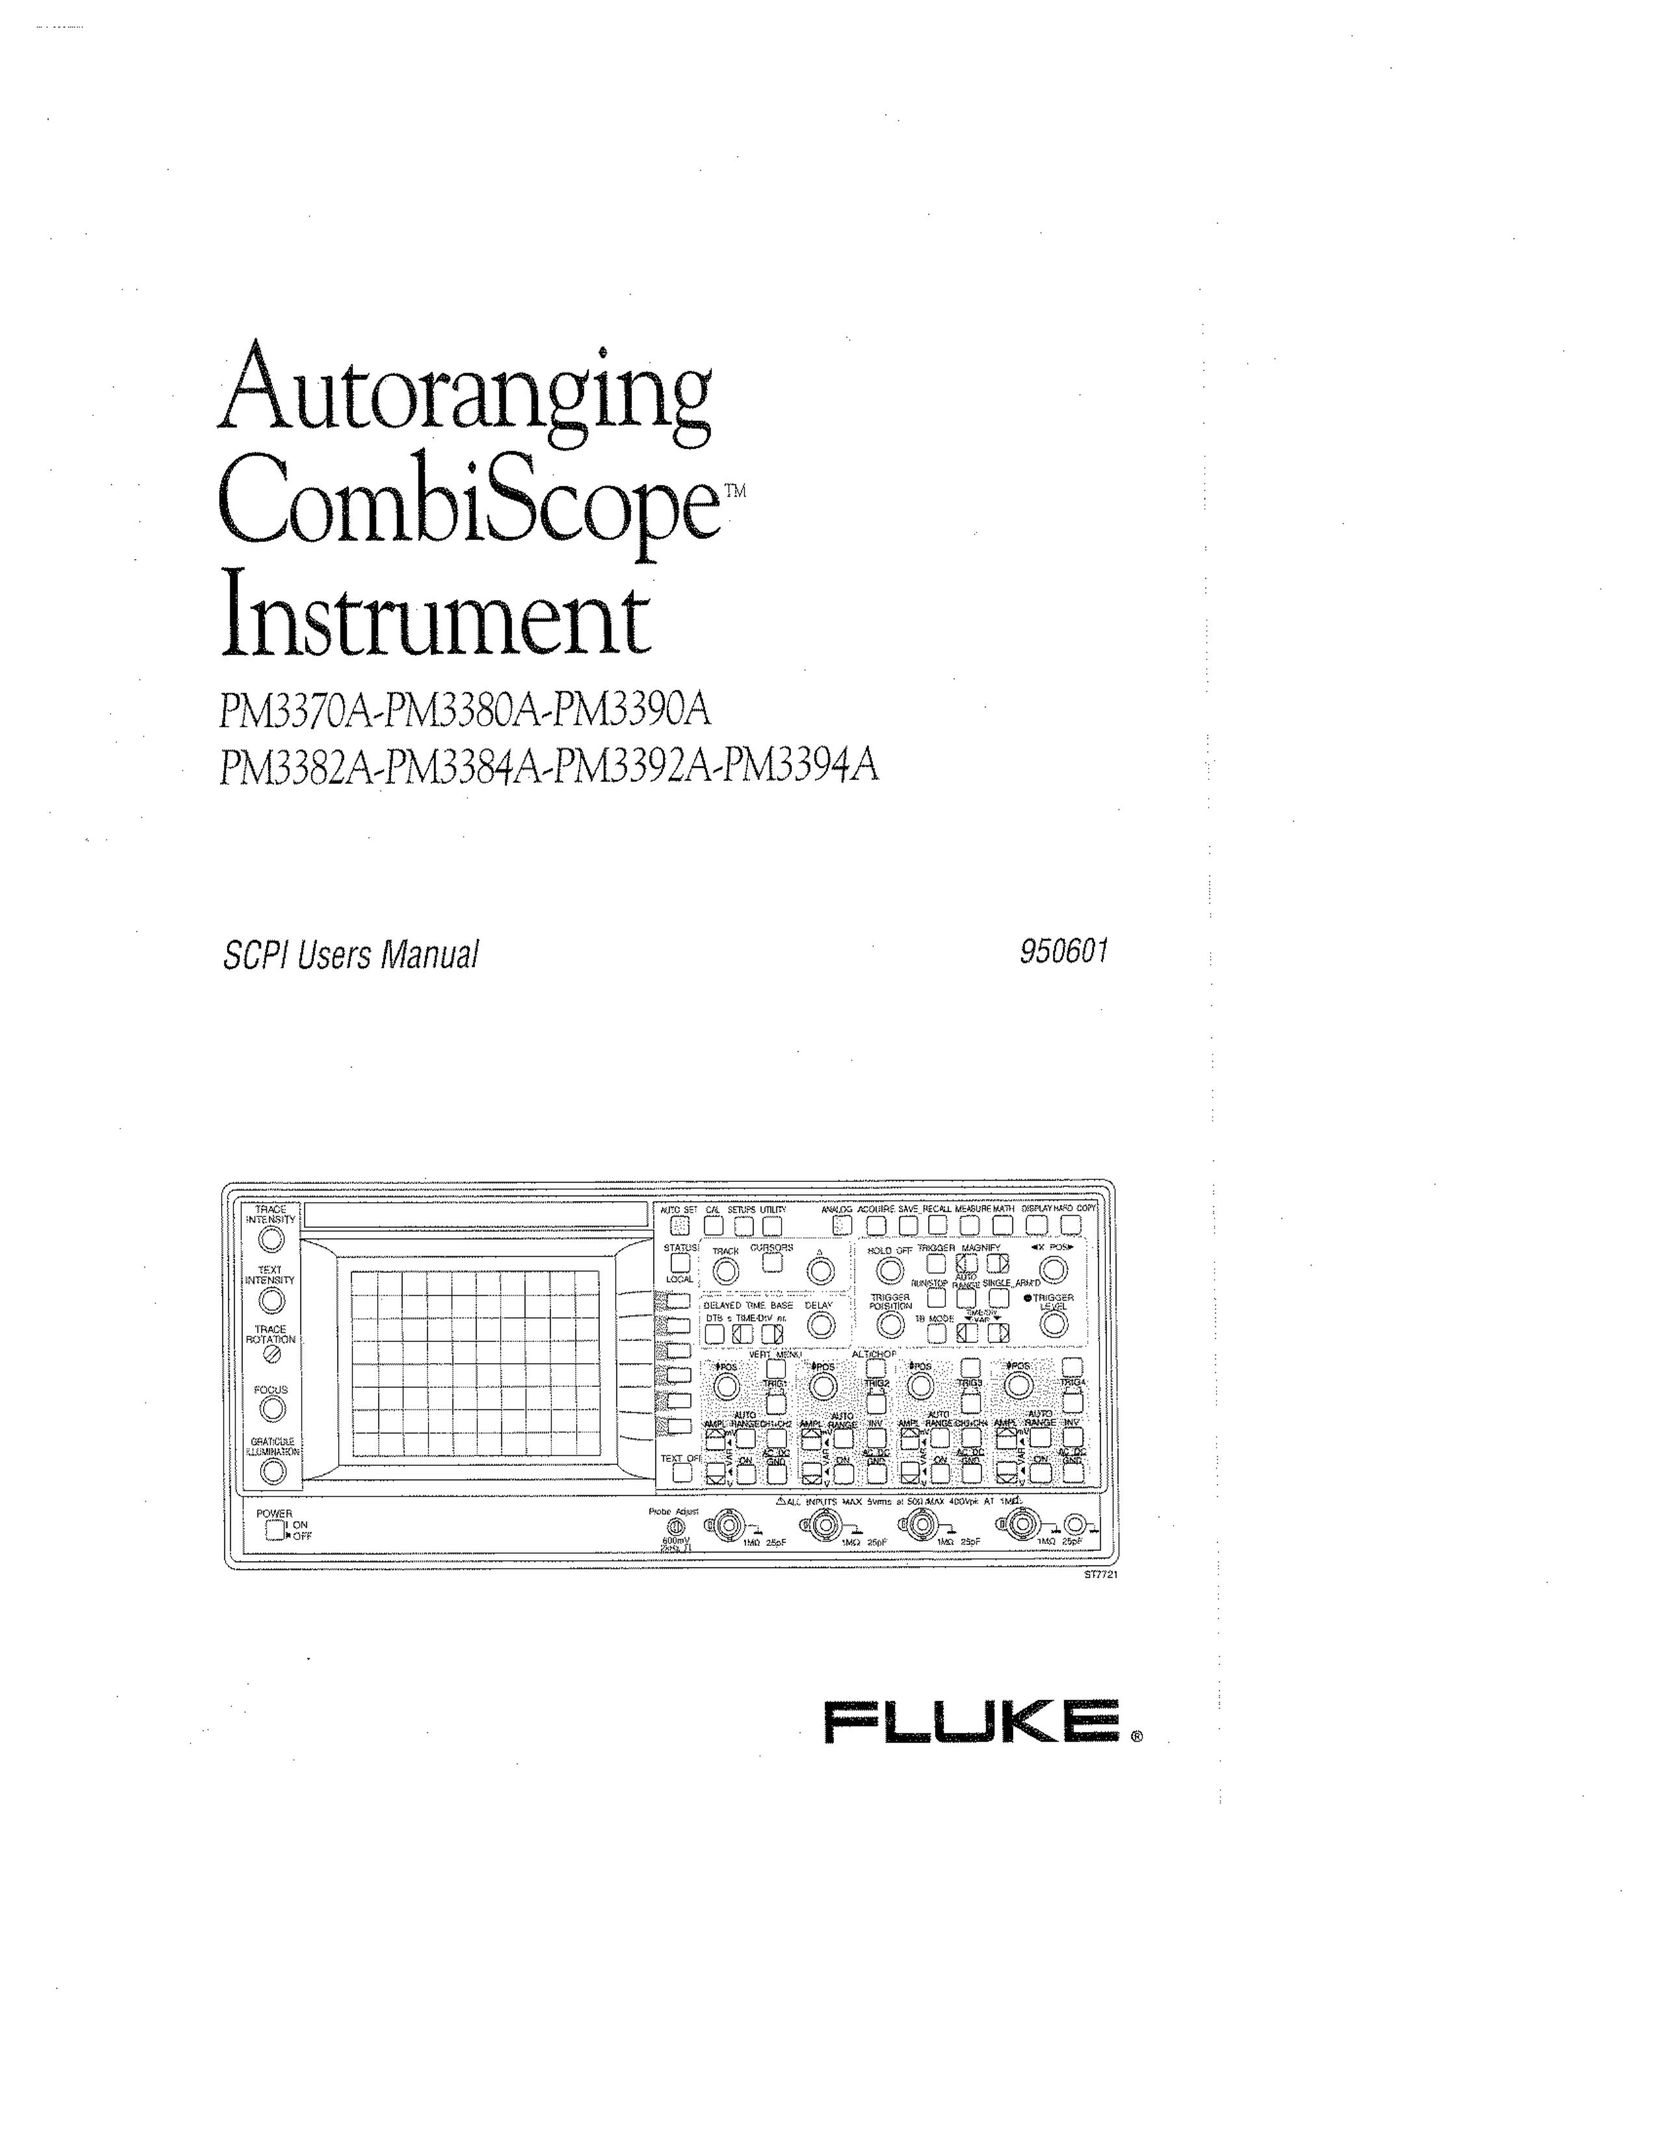 Fluke PM3370A Hunting Equipment User Manual